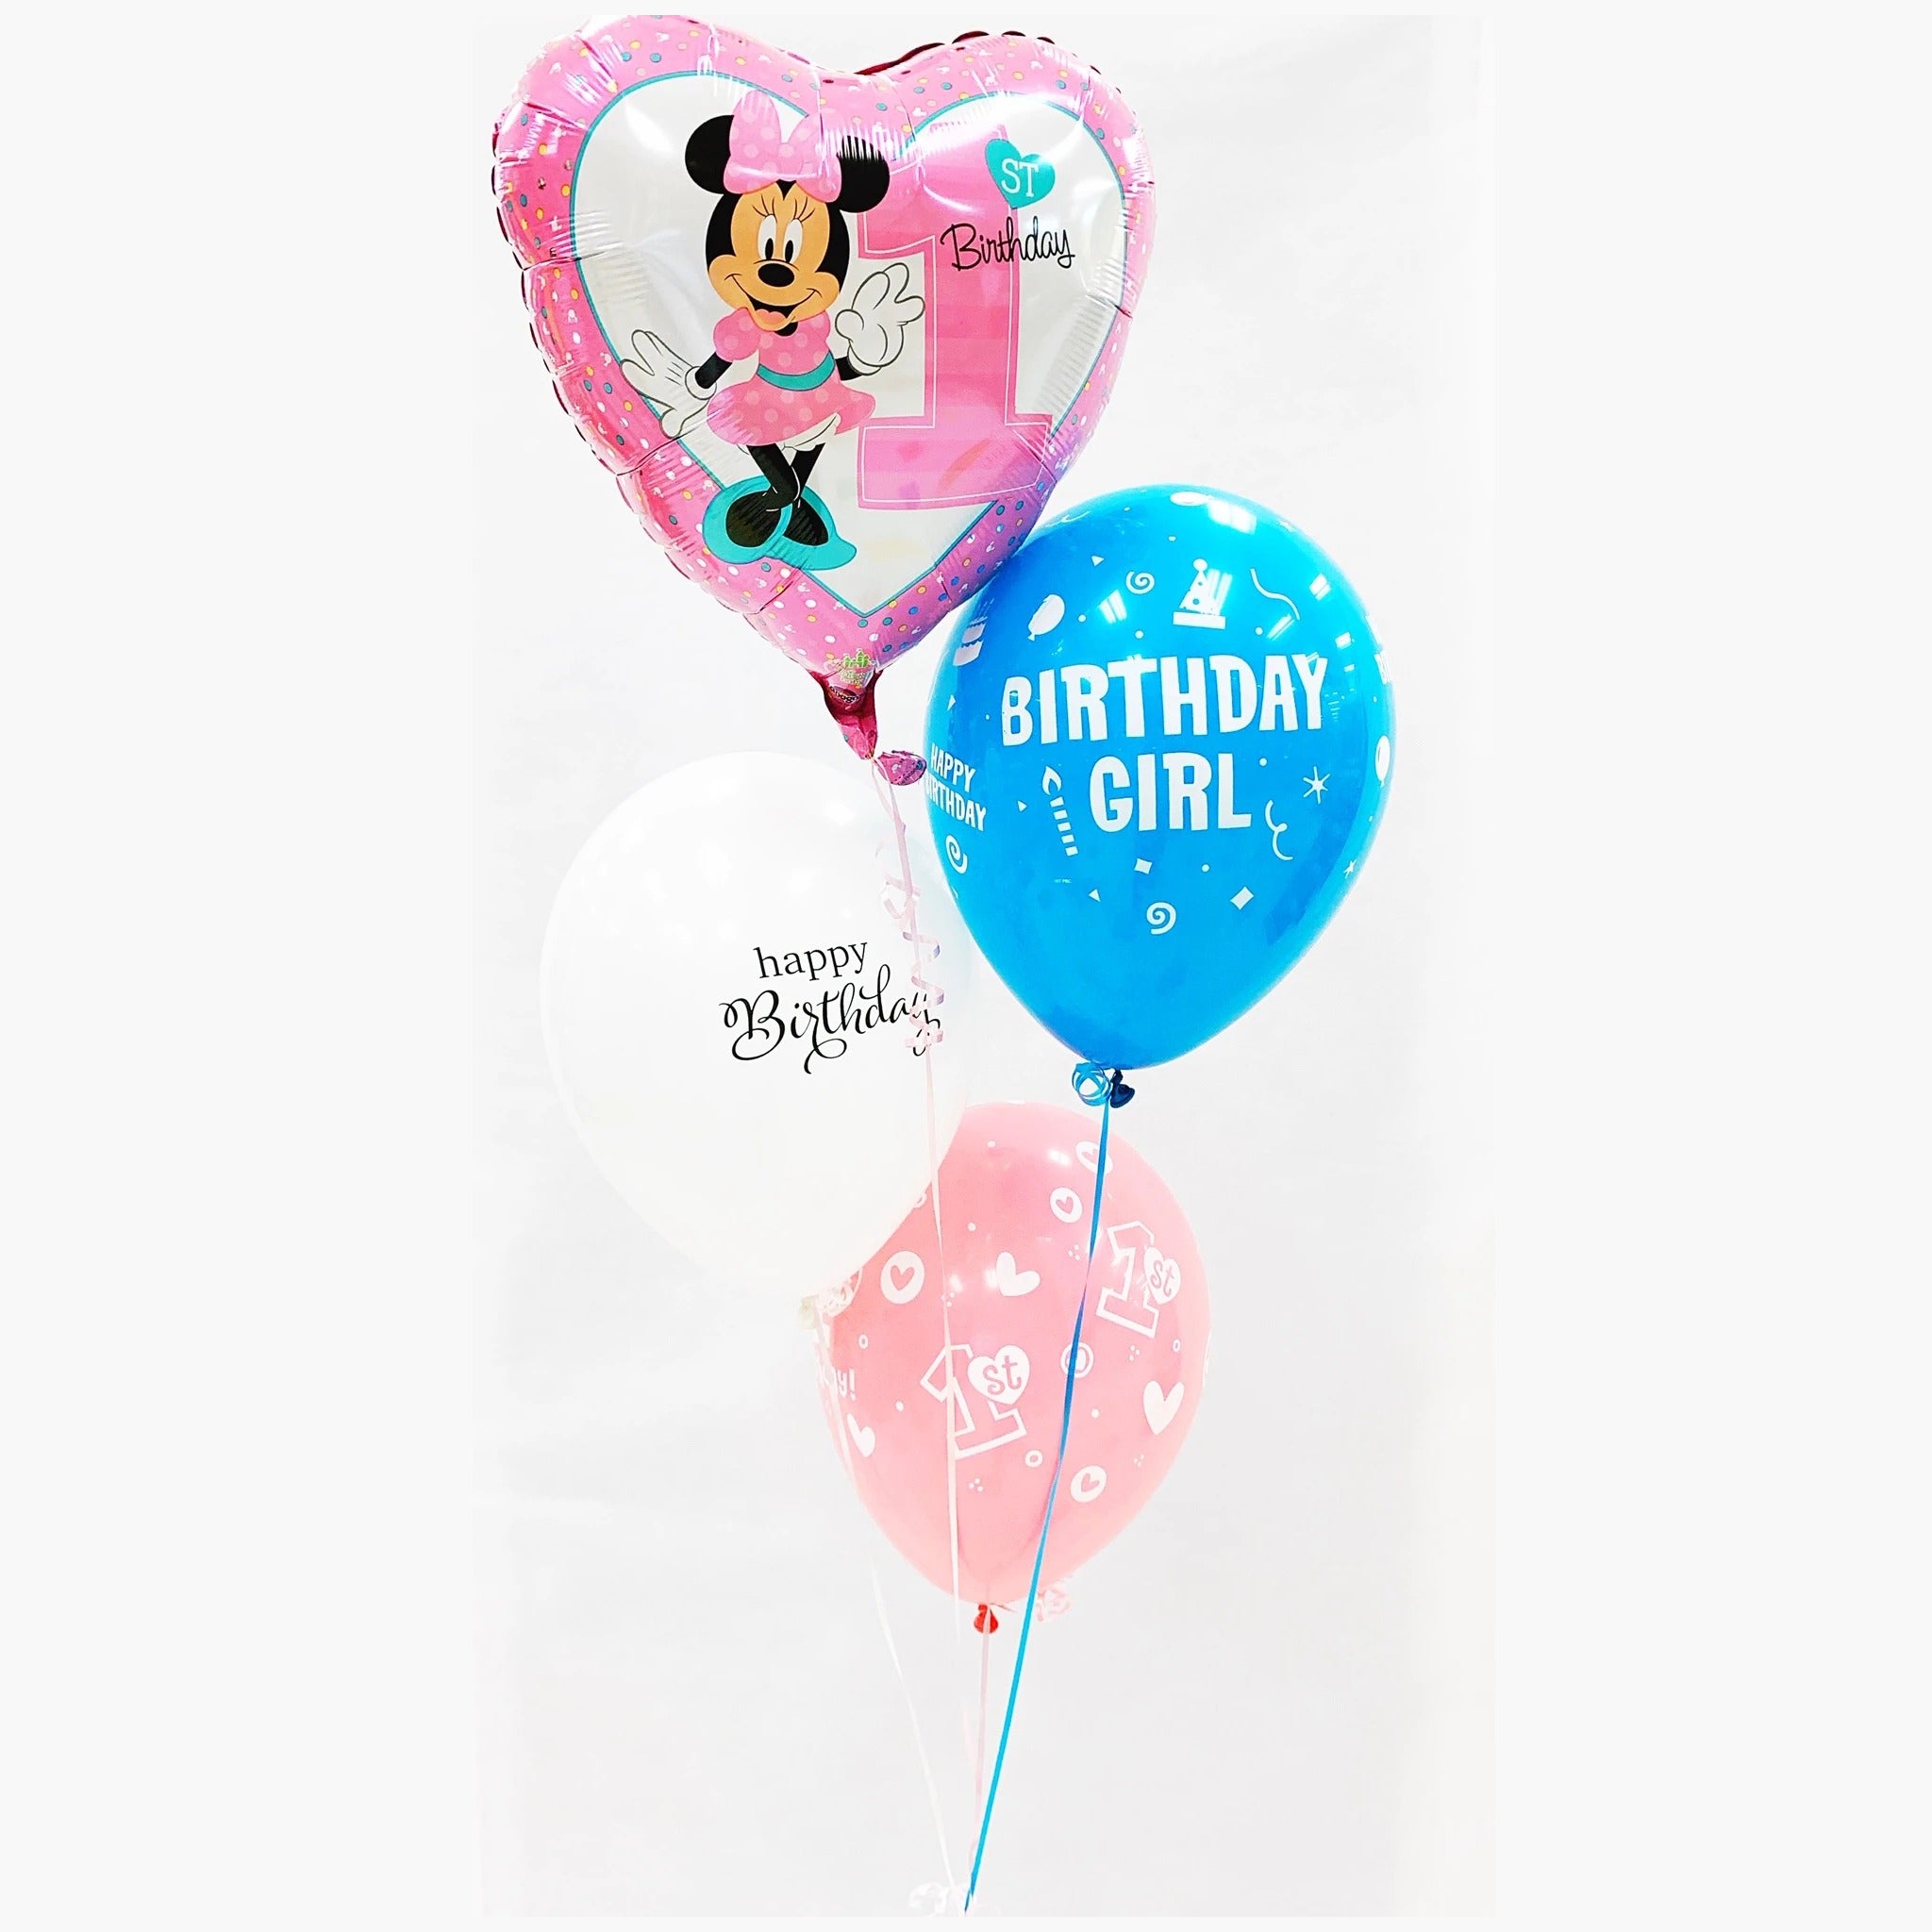 Minnie Mouse Birthday Balloon Bouquet 